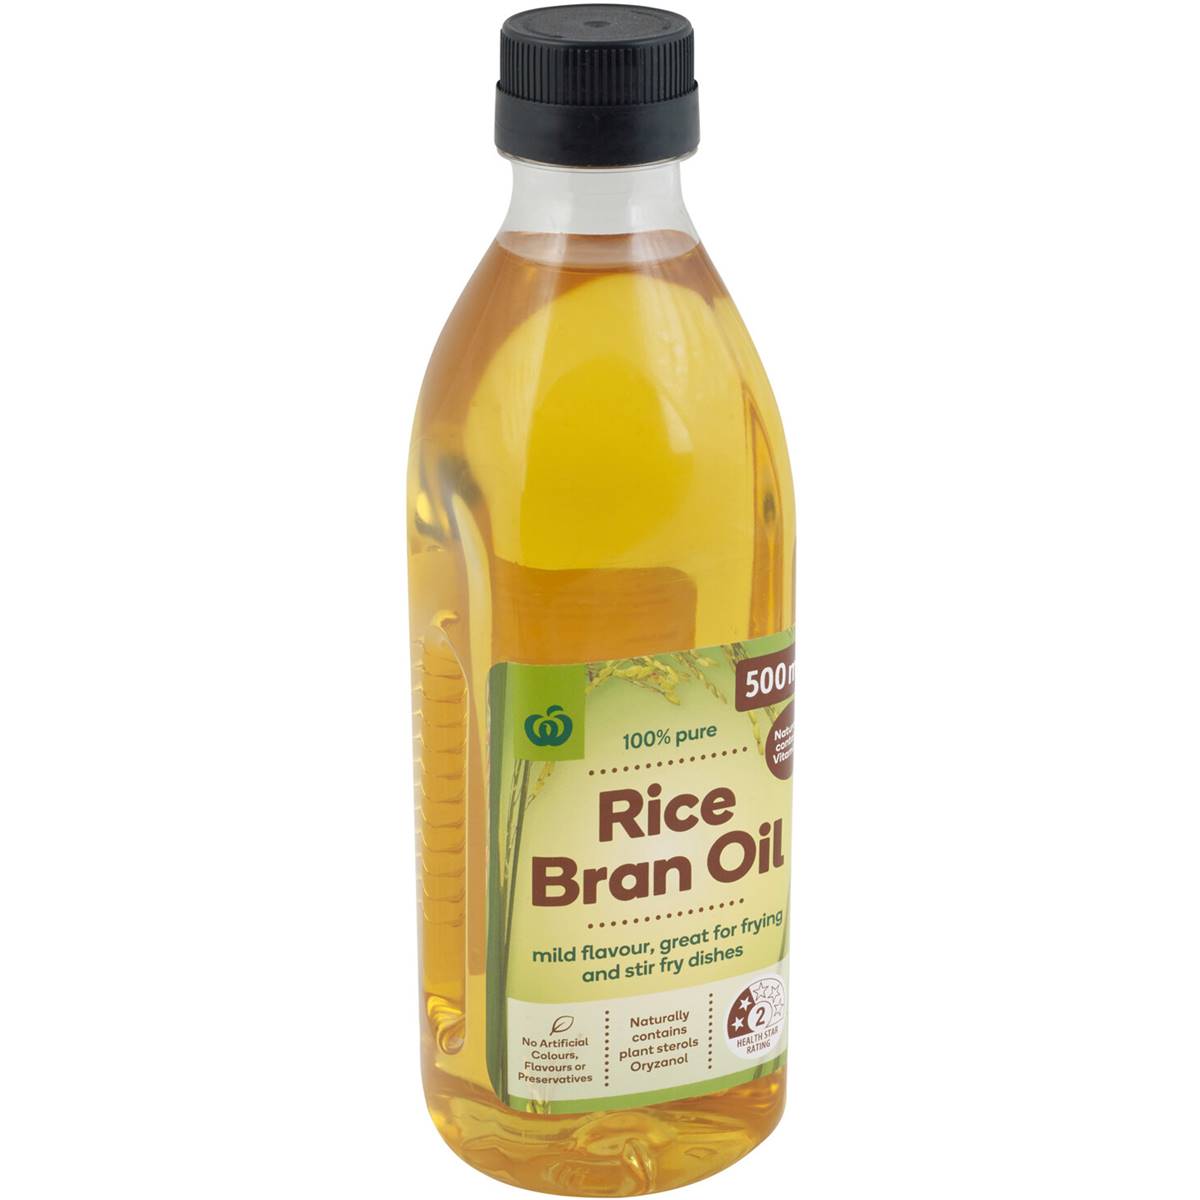 Calories in Woolworths Rice Bran Oil